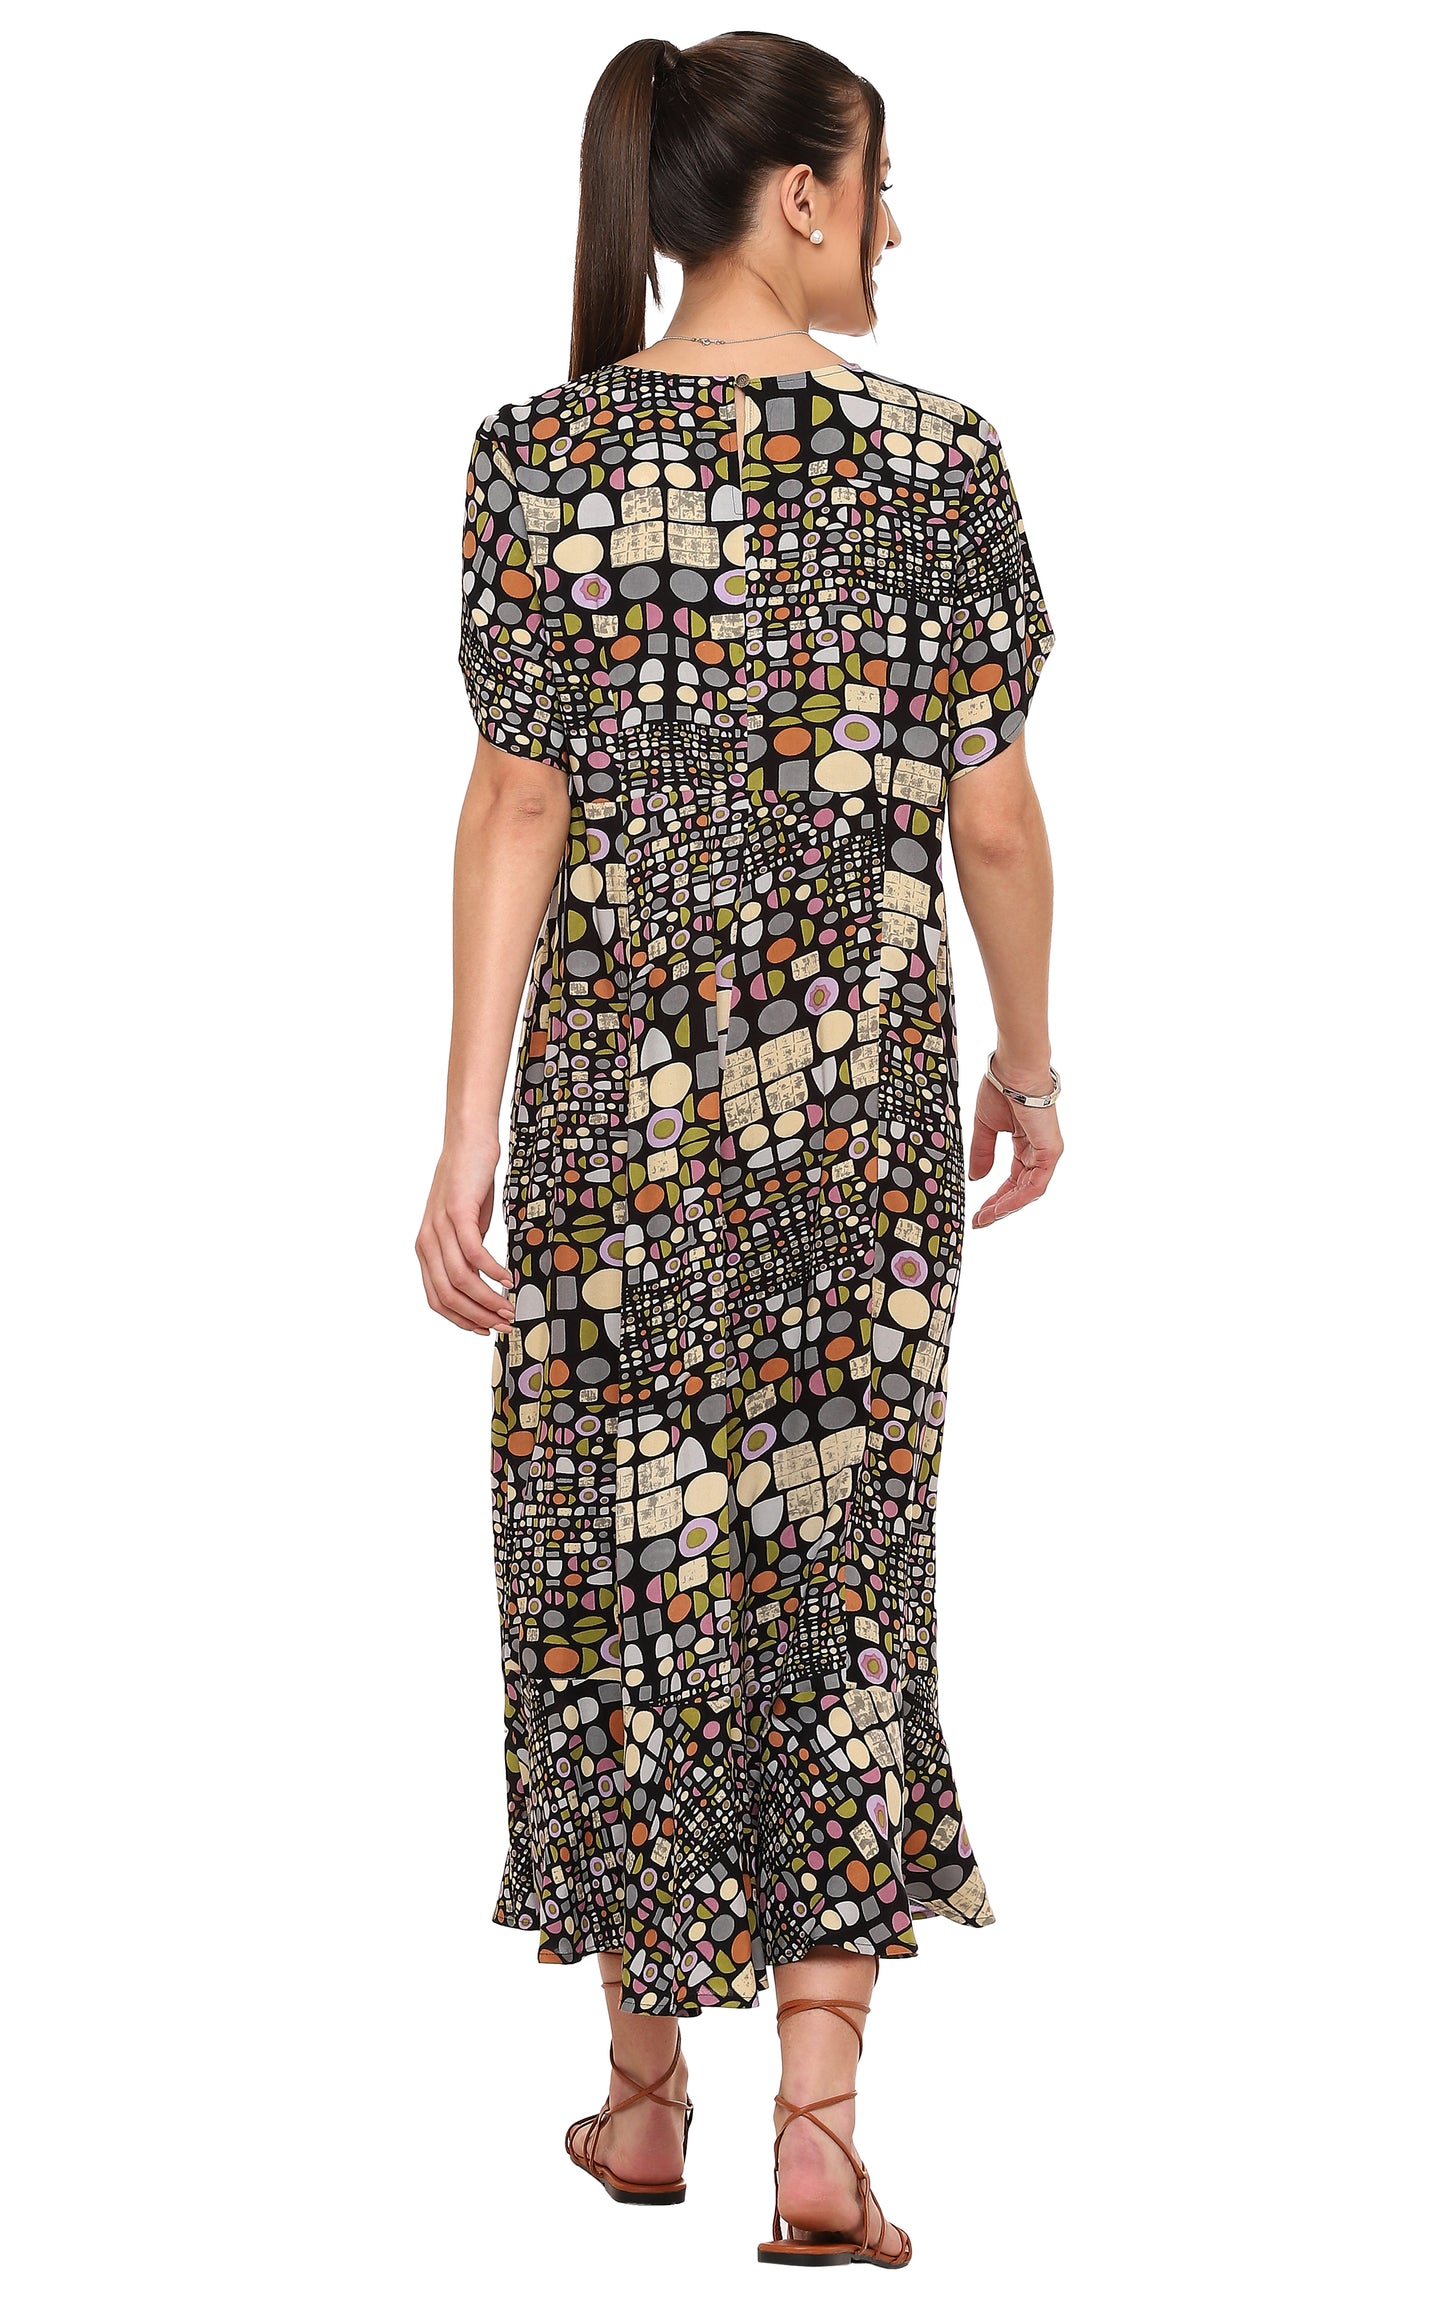 Tara Long Button Dress by Parsley & Sage